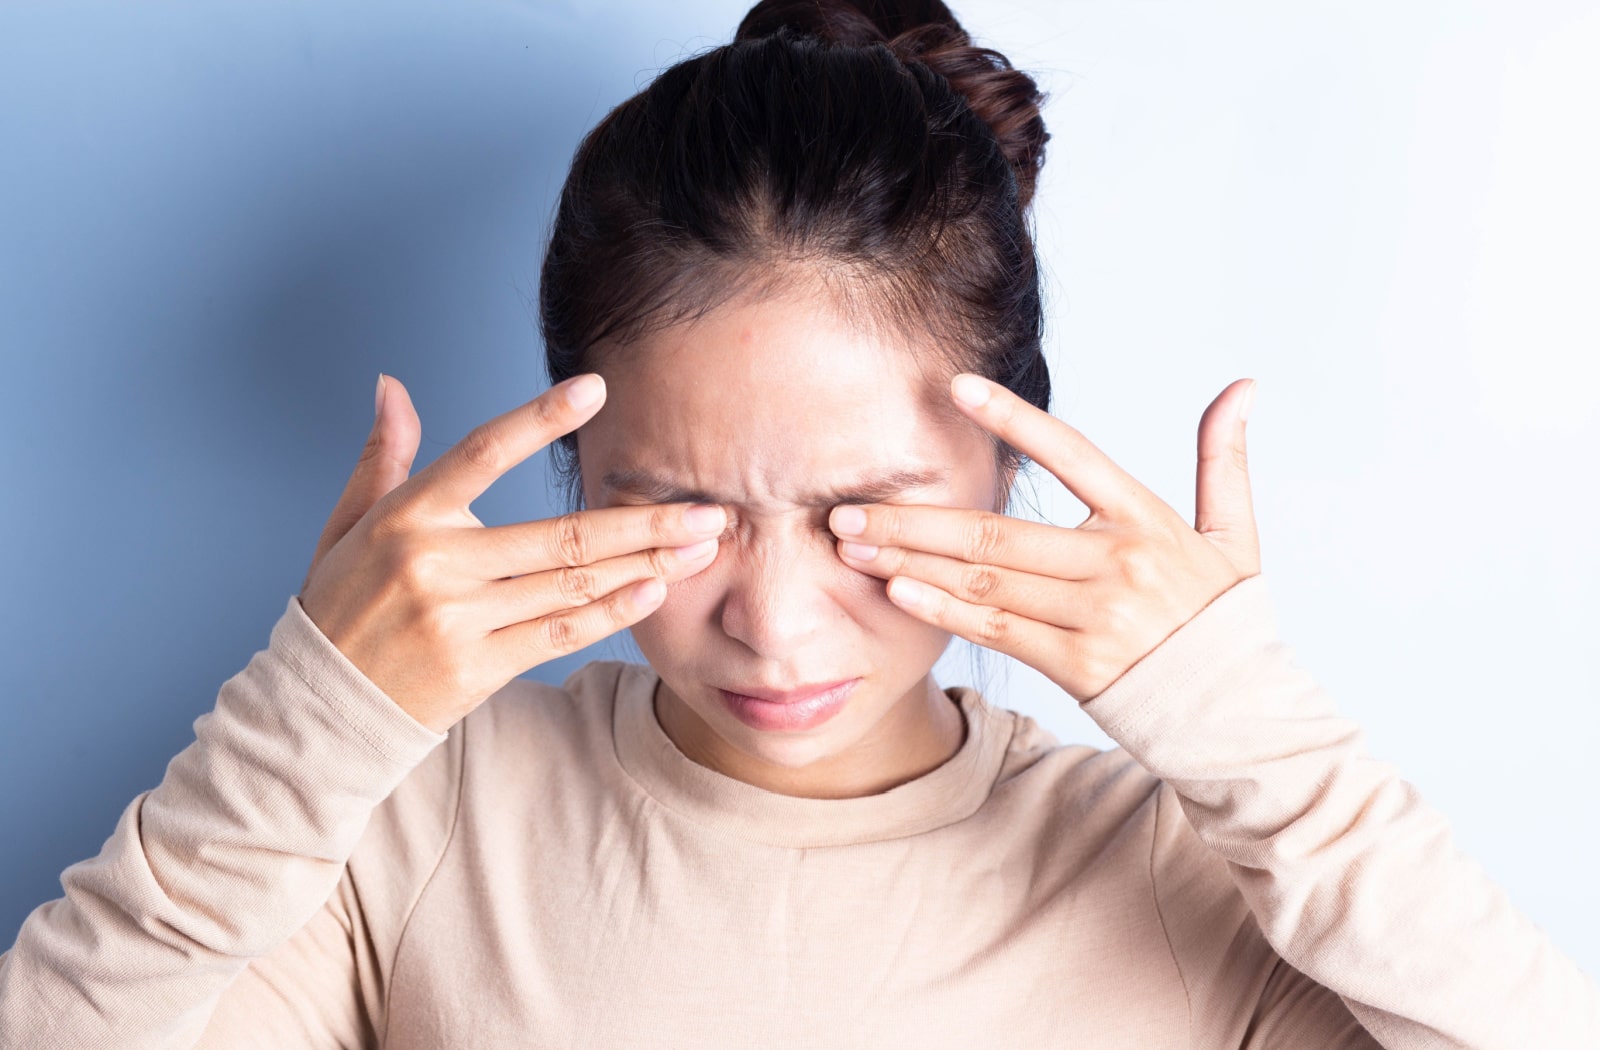 A woman rubs her irritated eyes.